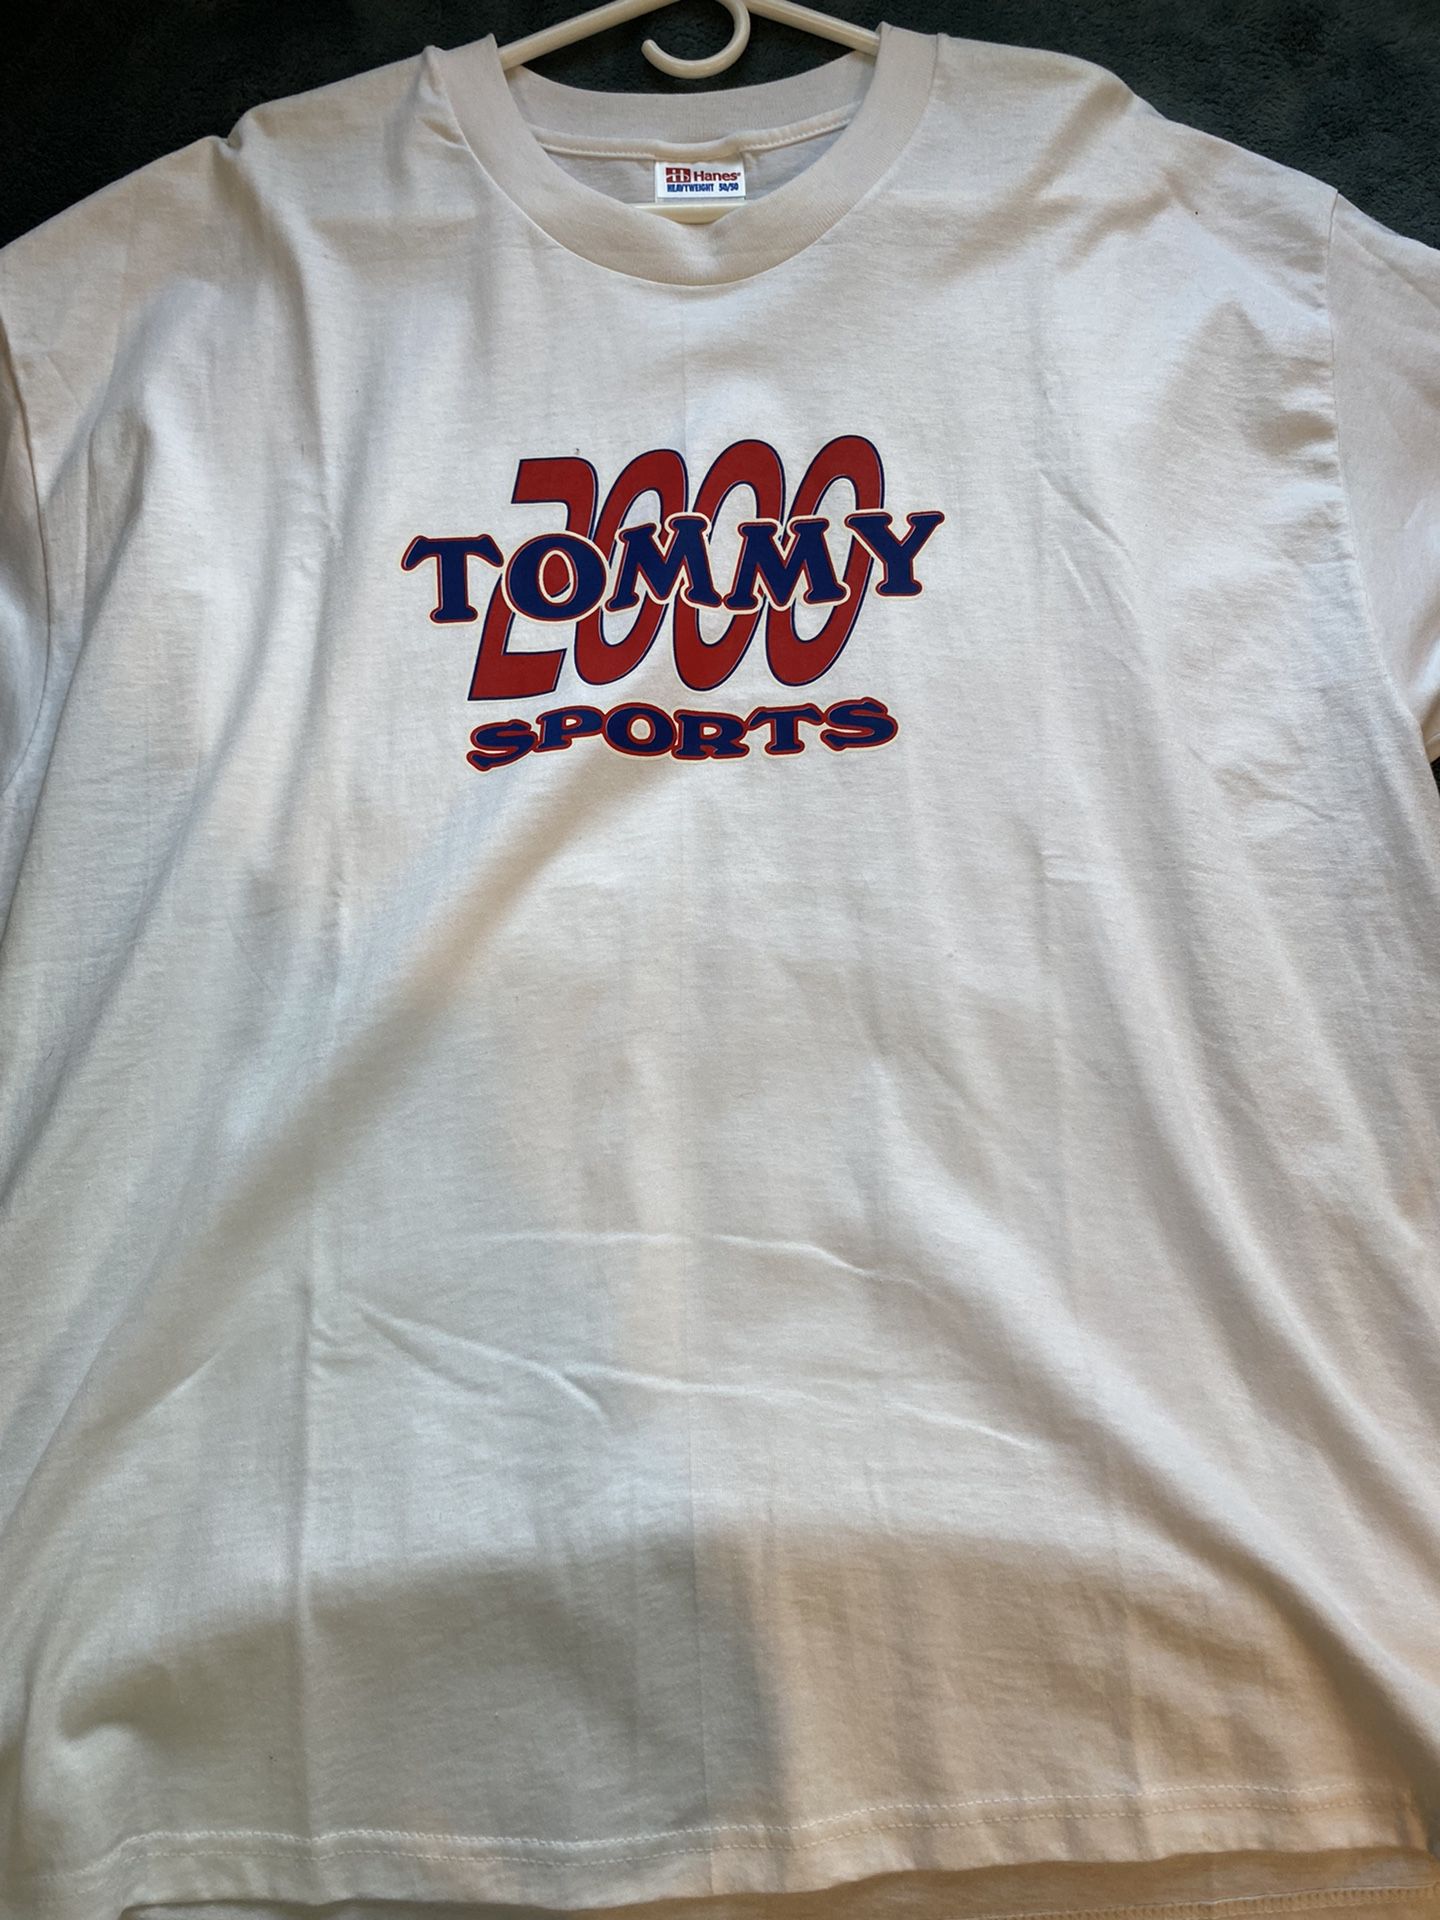 Tommy Sports Shirt